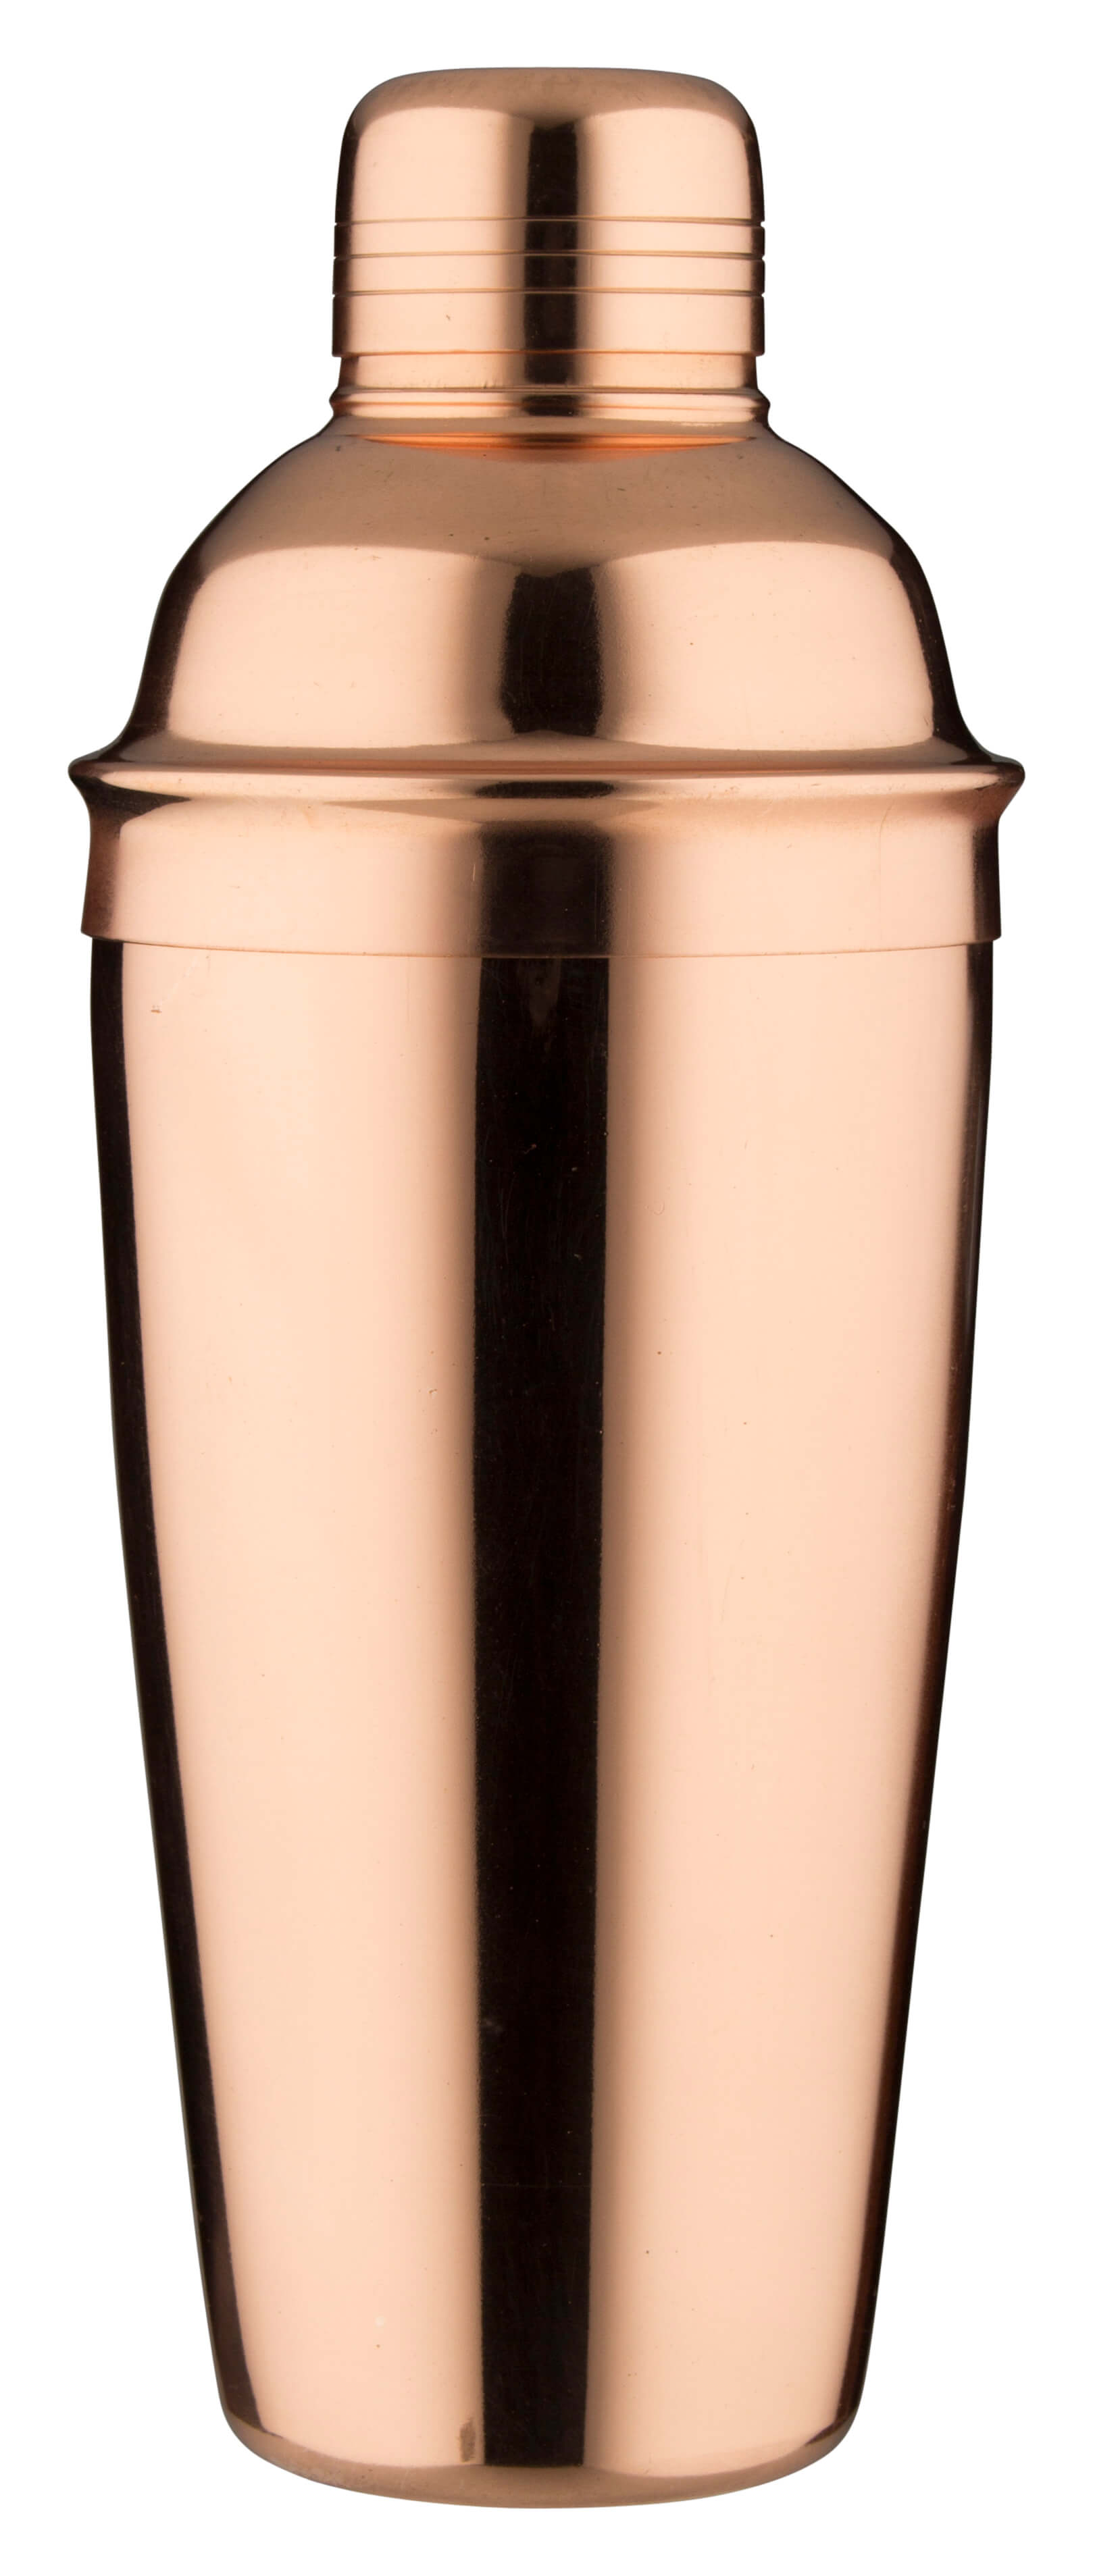 Cocktail Shaker, Edelstahl copper colored, polished, tripartite - 700ml